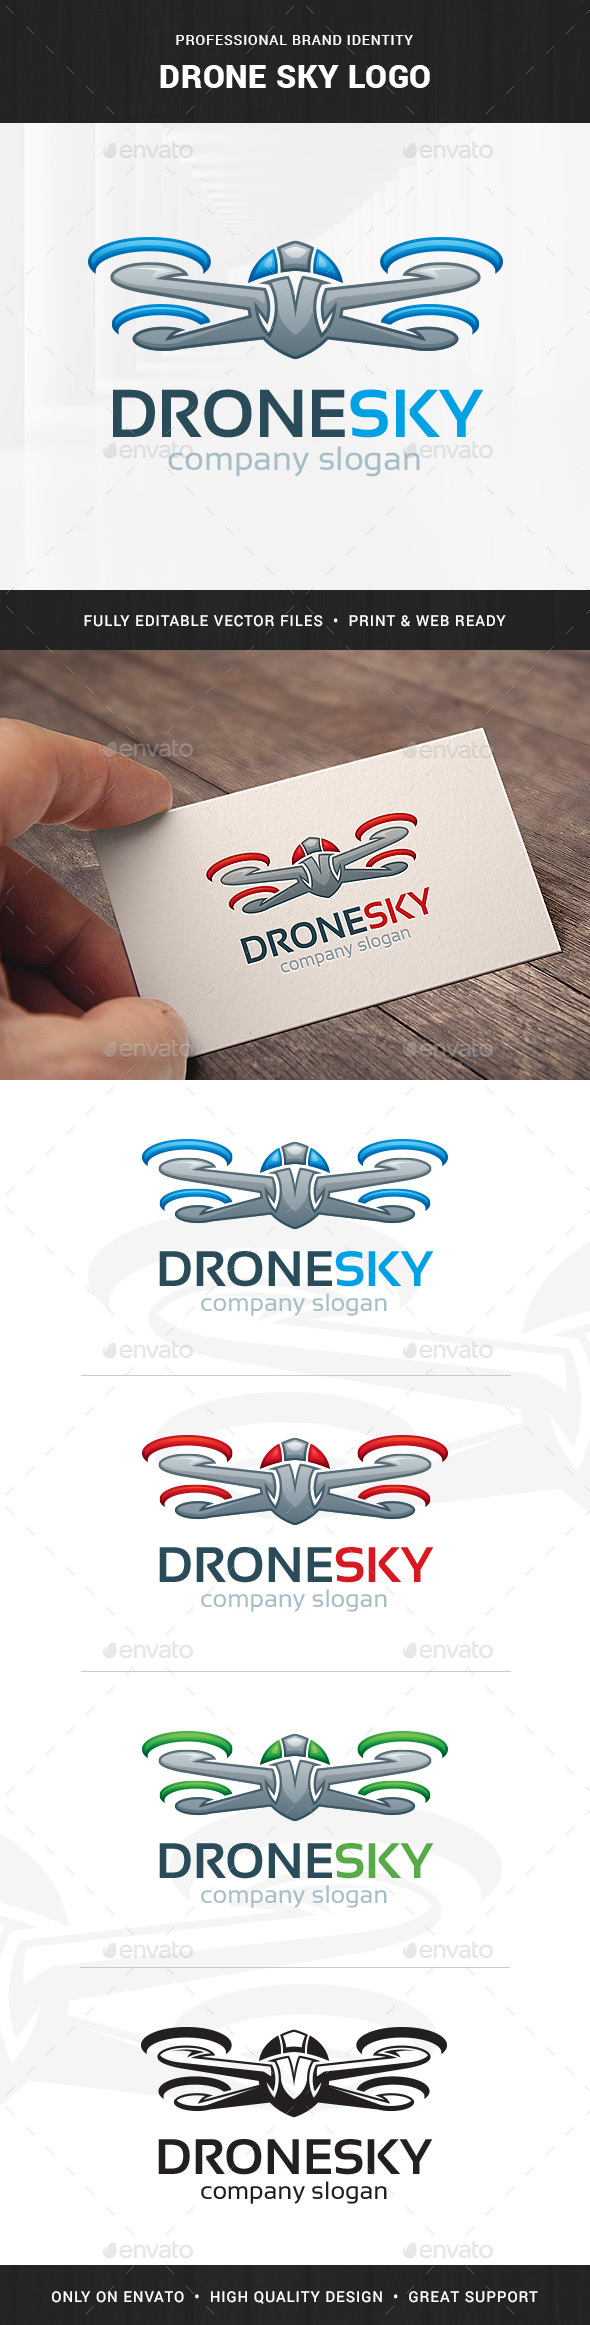 Drone Sky Logo Template